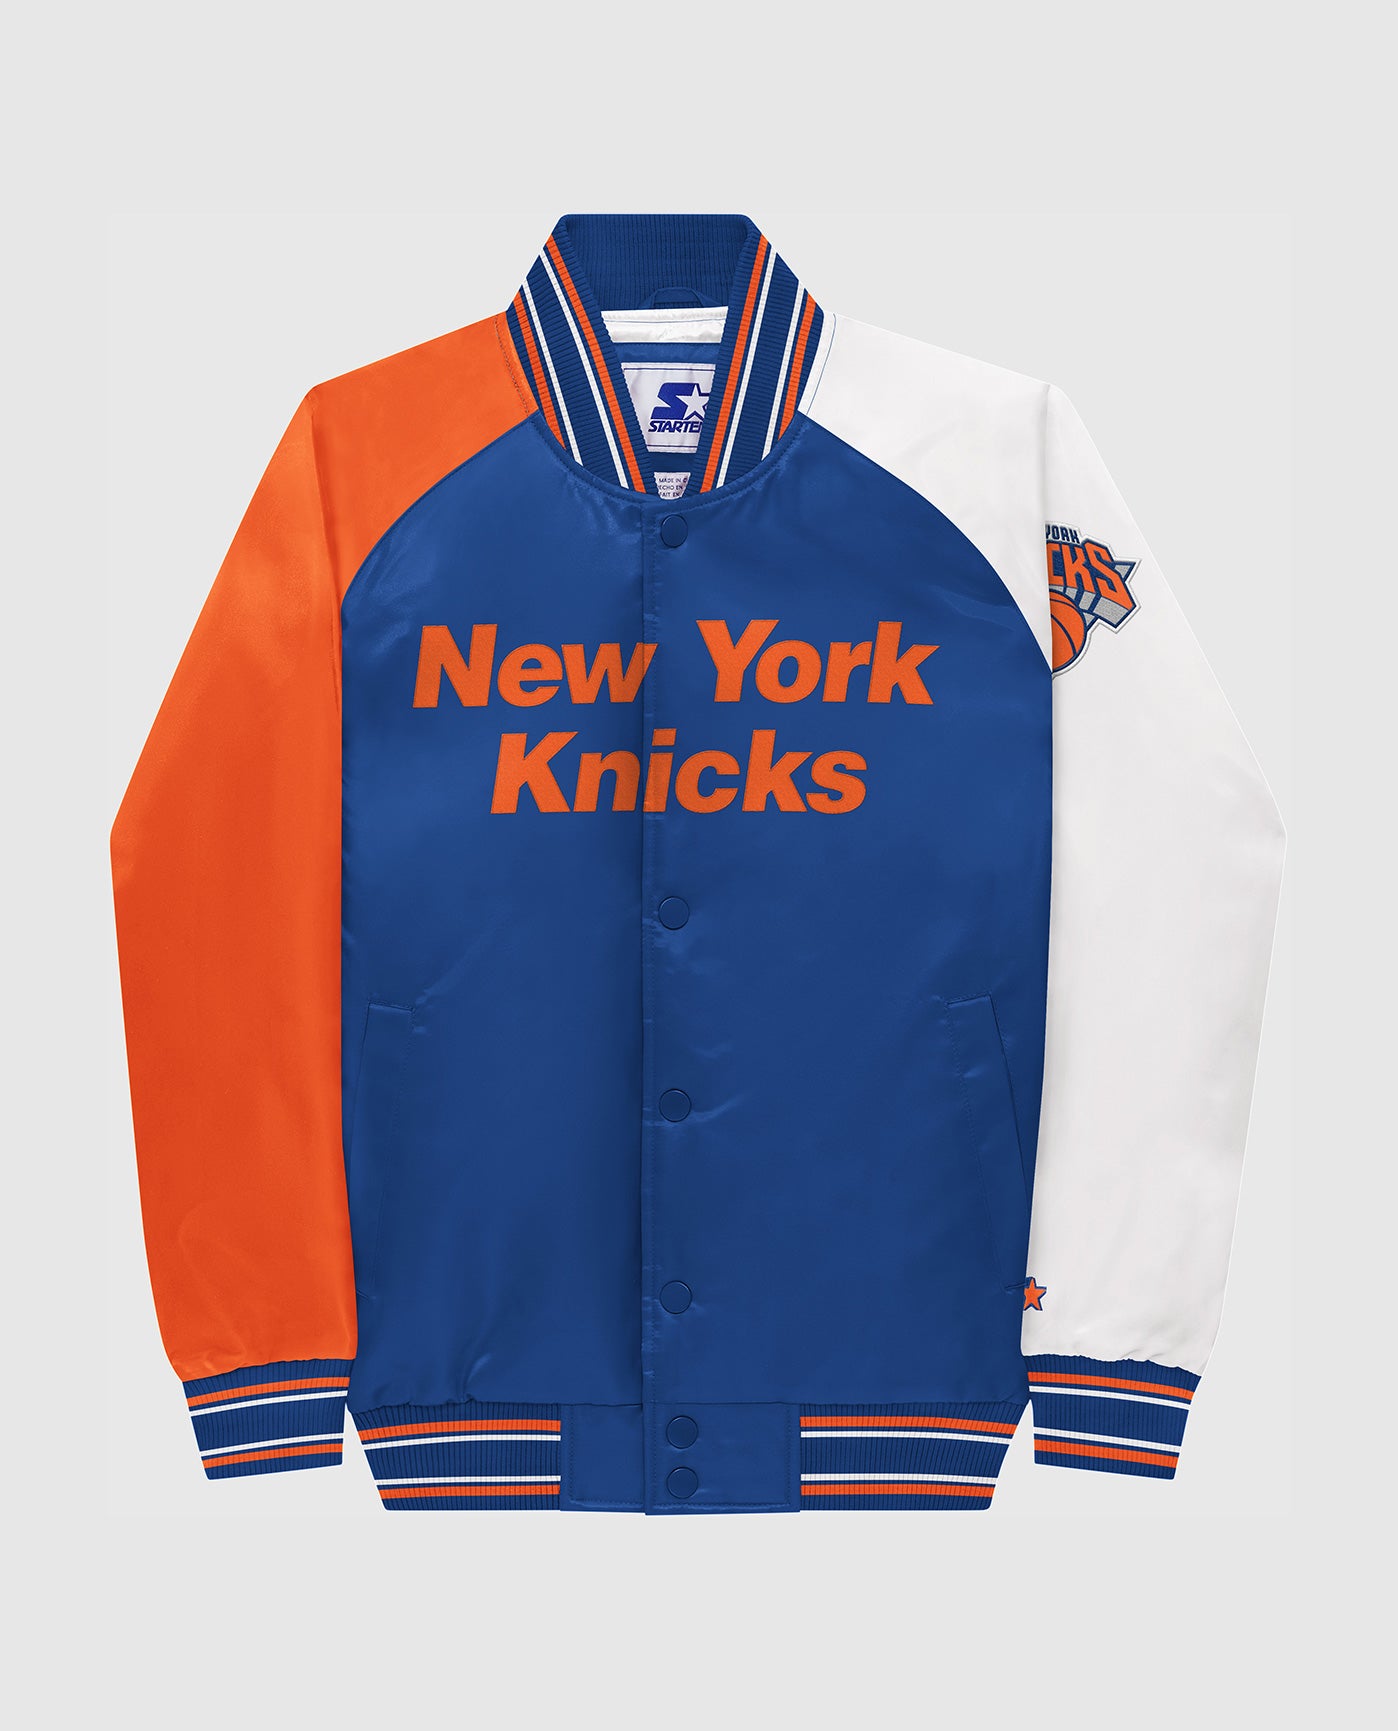 STARTER, Shirts, New York Knicks Starter Hockey Jersey